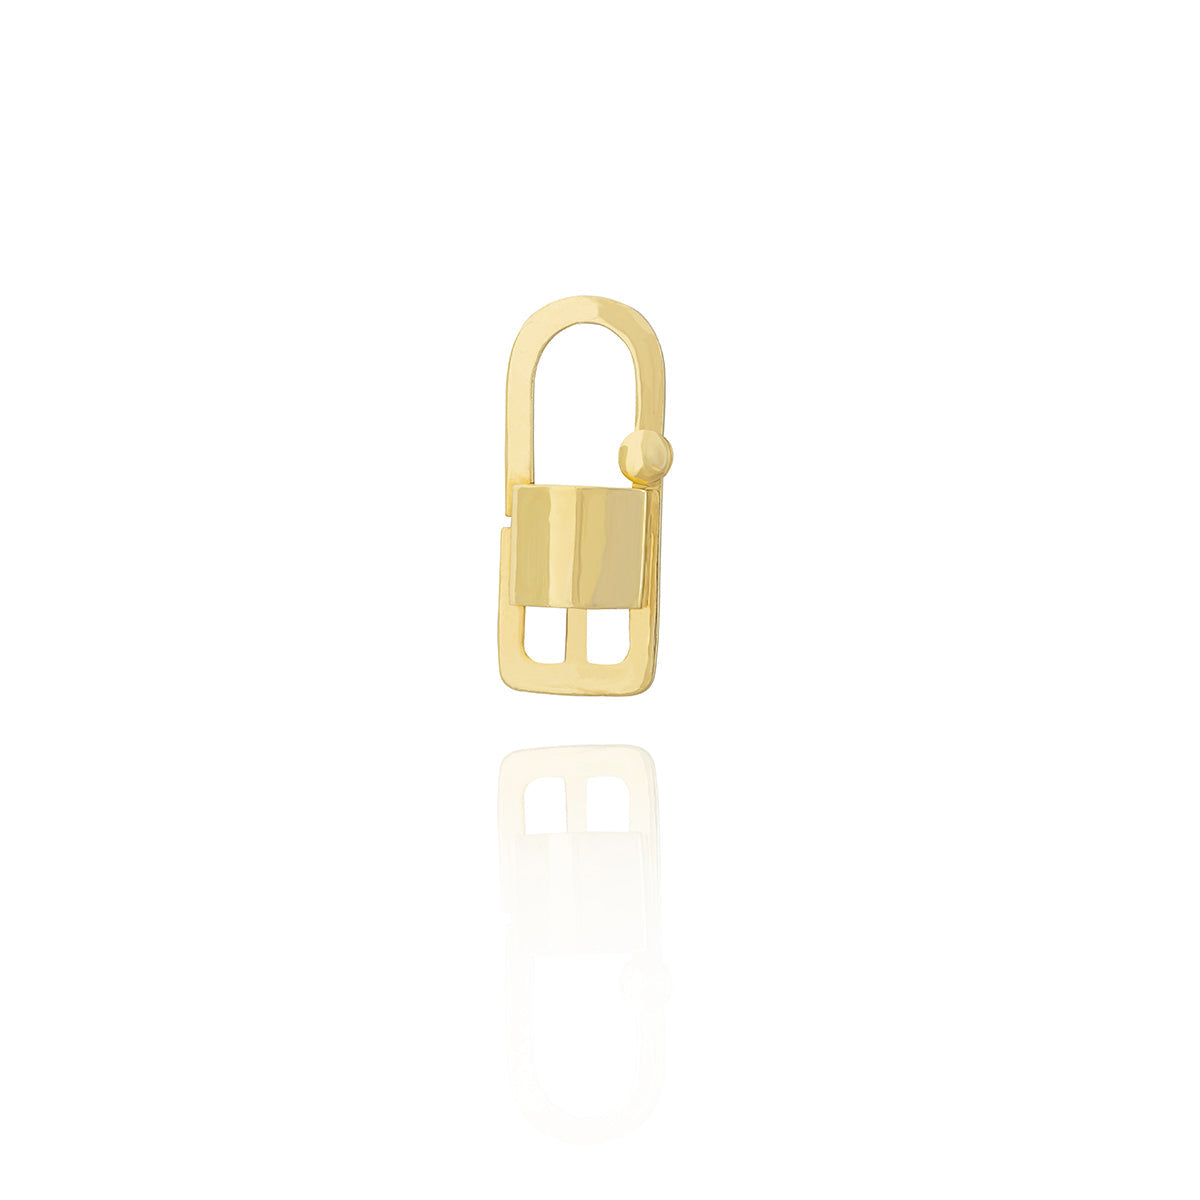 Keychain in 18k Yellow Gold